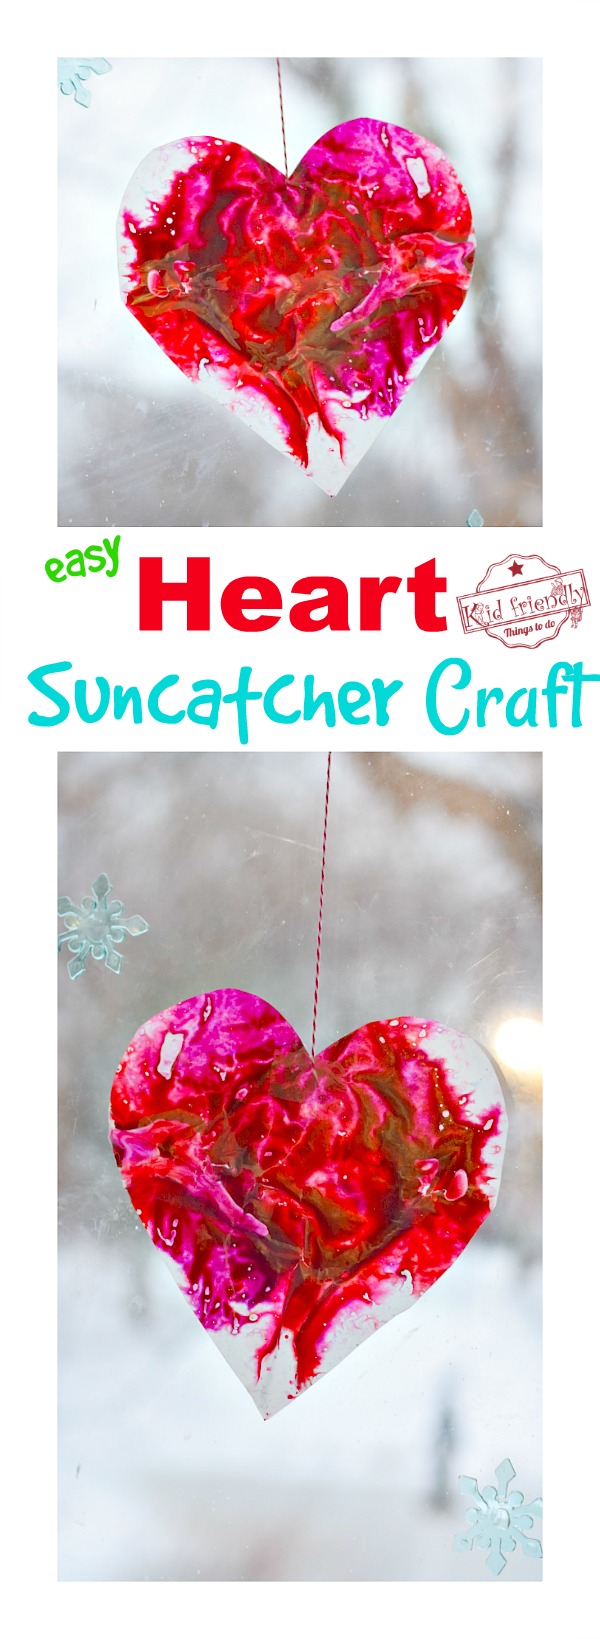 Heart Sun Catcher Craft for Kids to Make